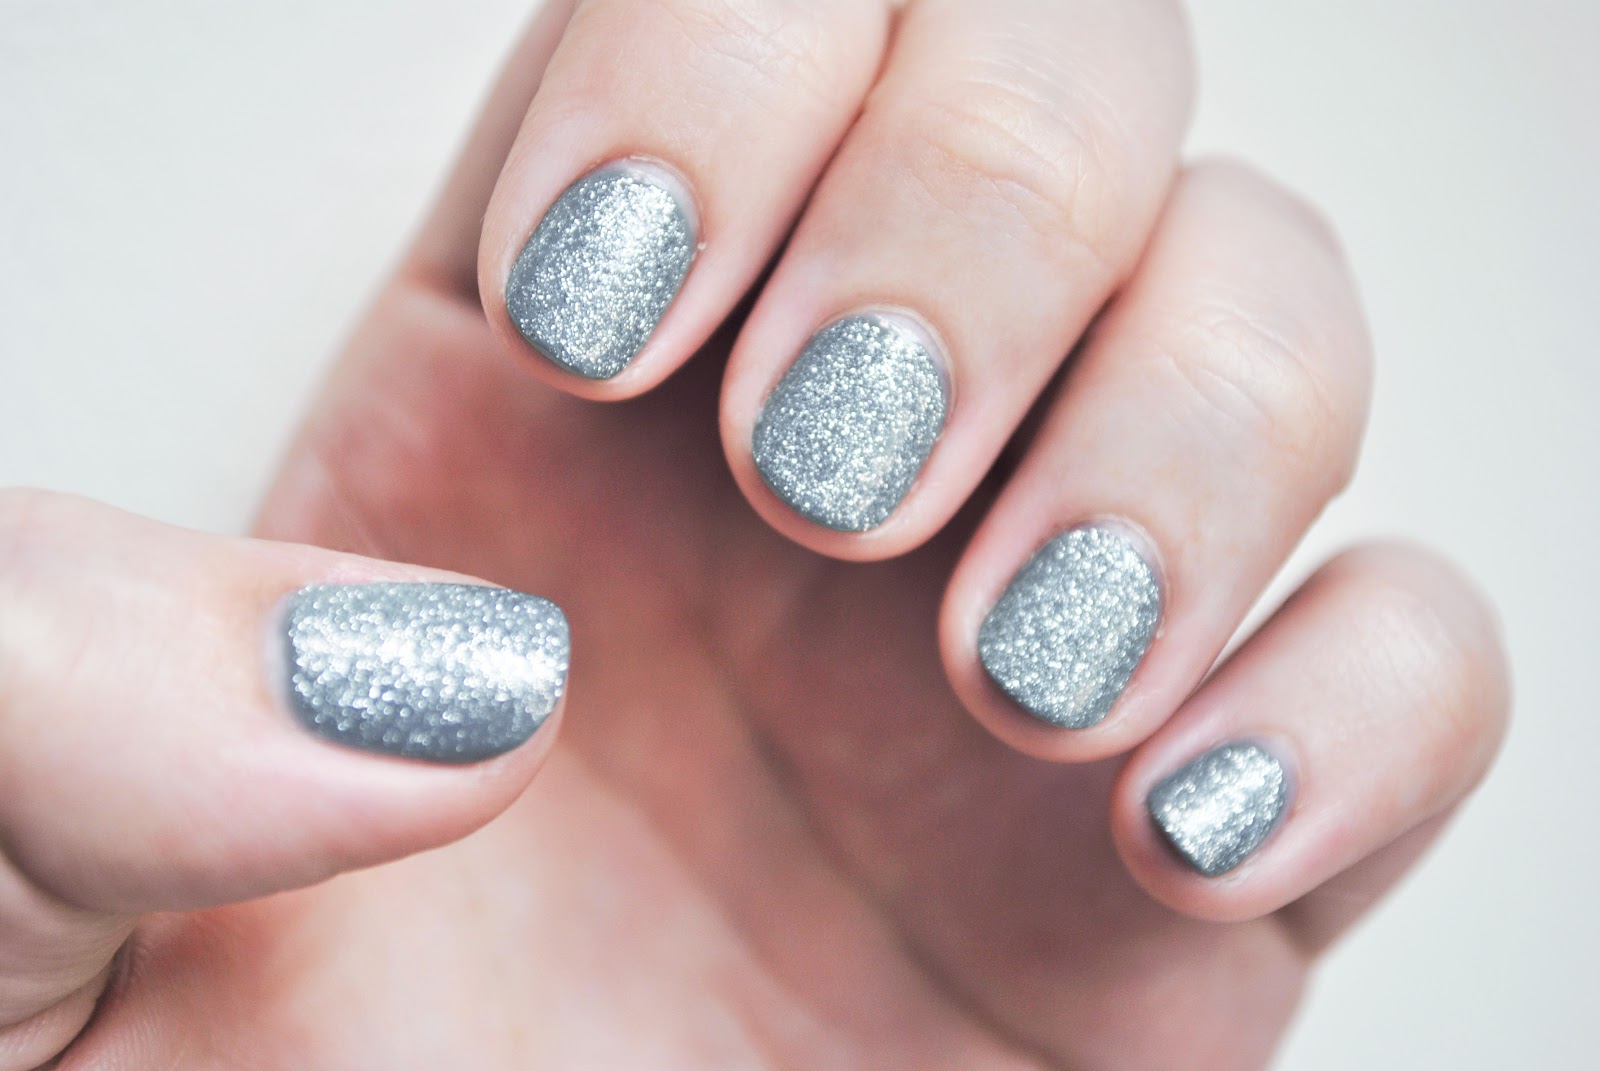 2. Silver glitter nail polish - wide 1